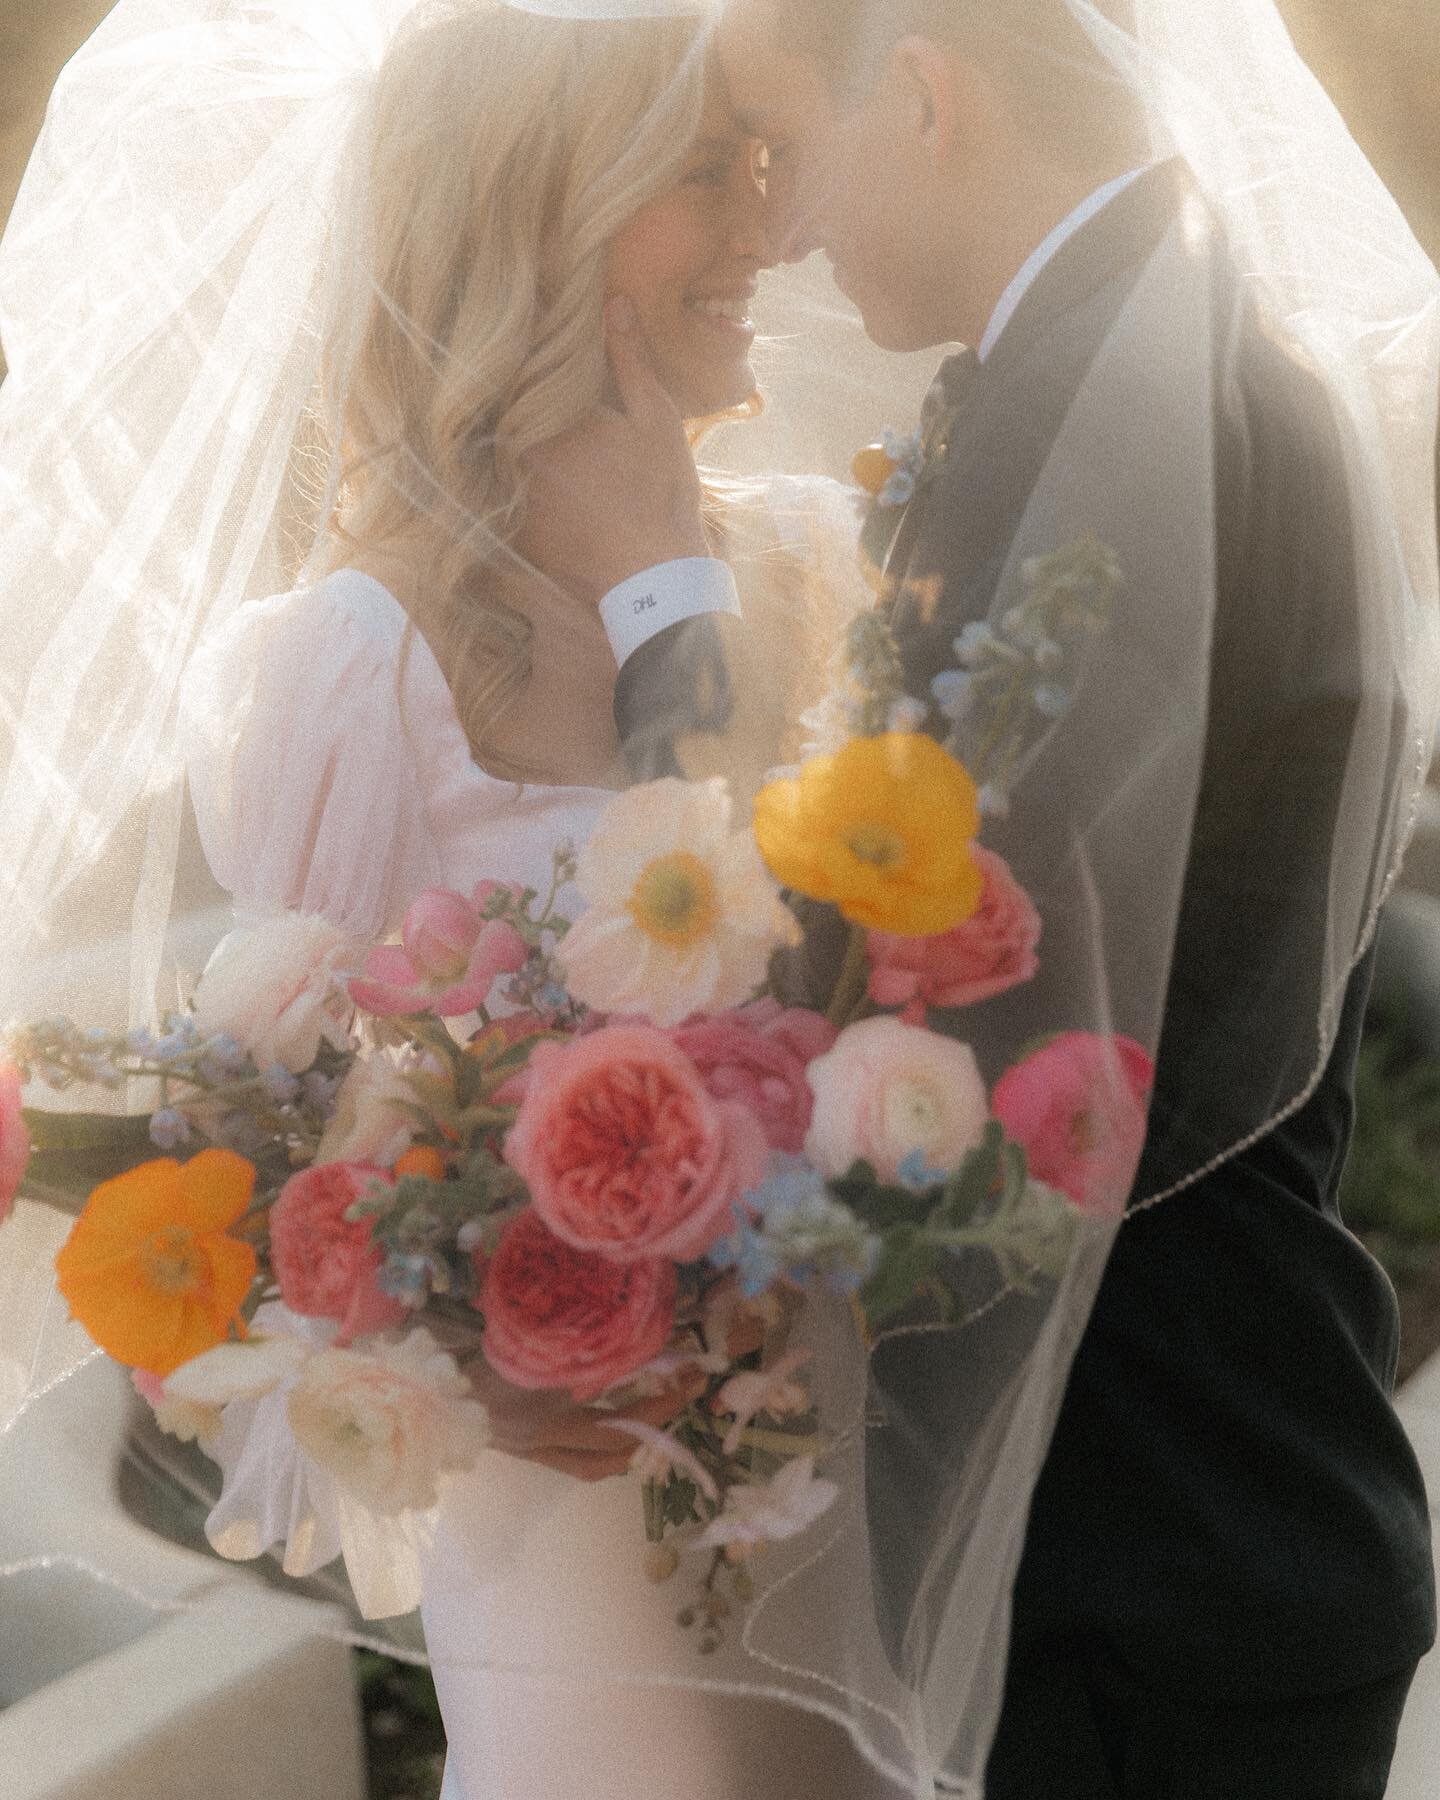 Real Bride Bliss ✨ Our beautiful #frankiejanebride in a beautiful custom sleeve 

#realbride #weddingdress #weddingdressinspo #utahweddingphotography #utahwedding #utahbridals #utahbridalshop #modestweddingdress